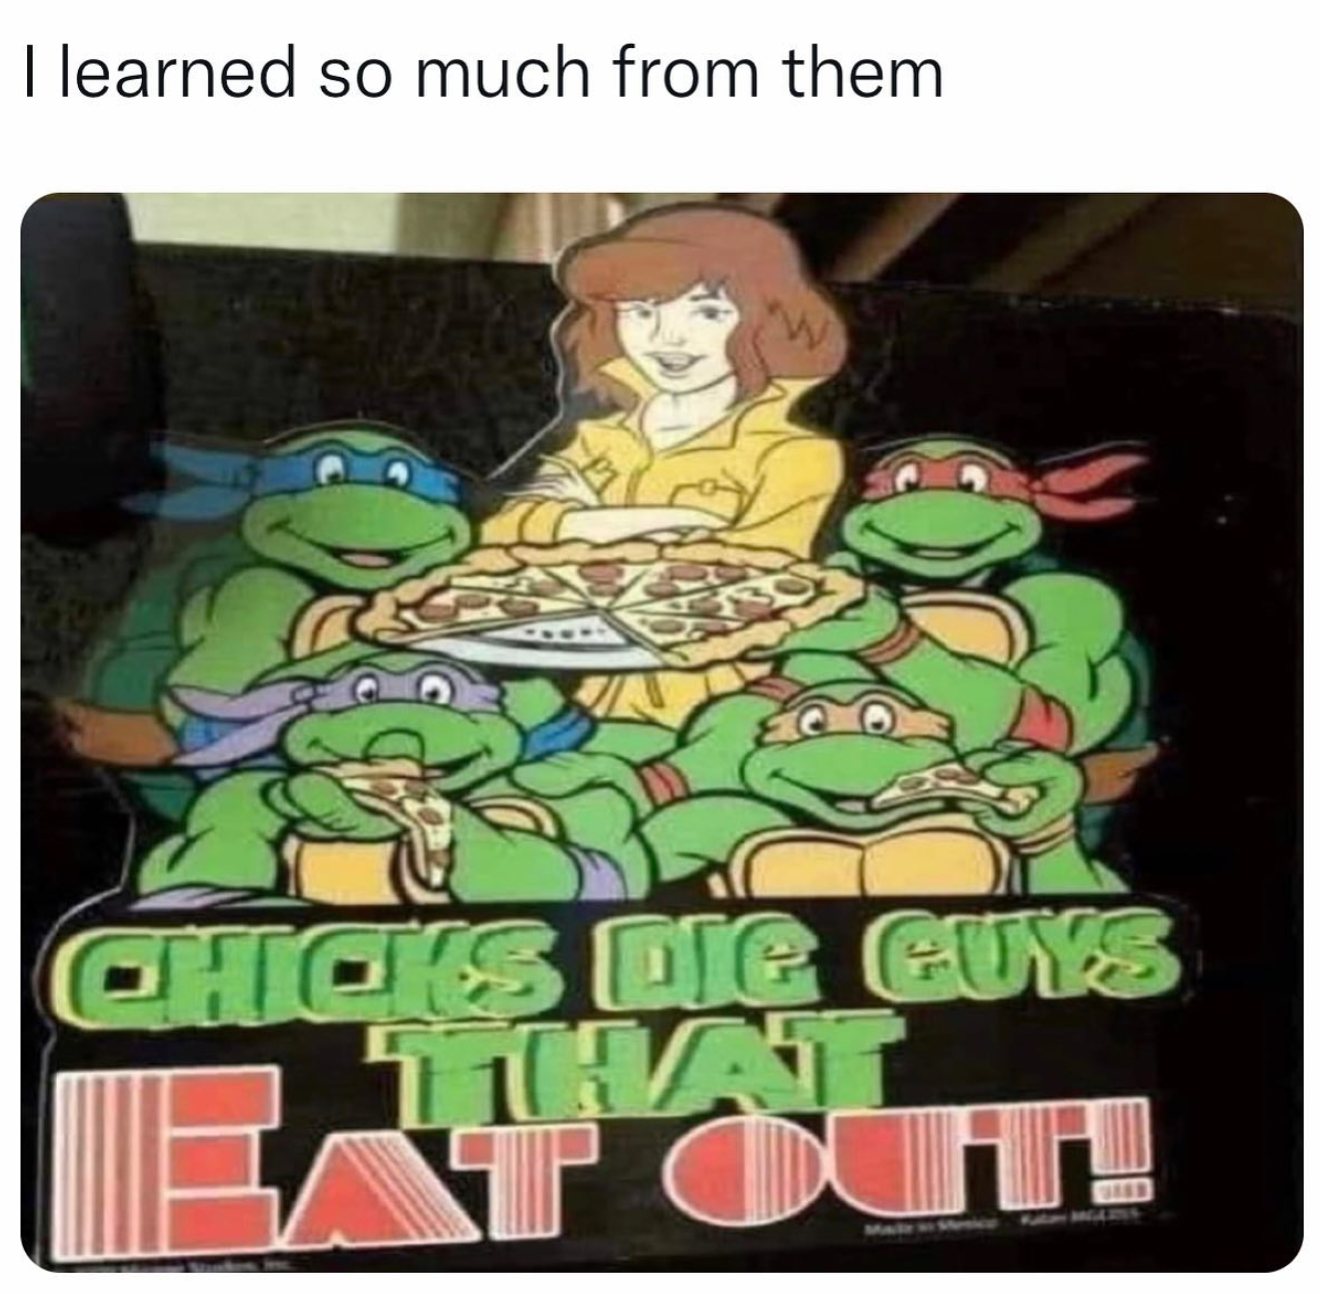 chicks dig guys that eat out, teenage mutant ninja turtles